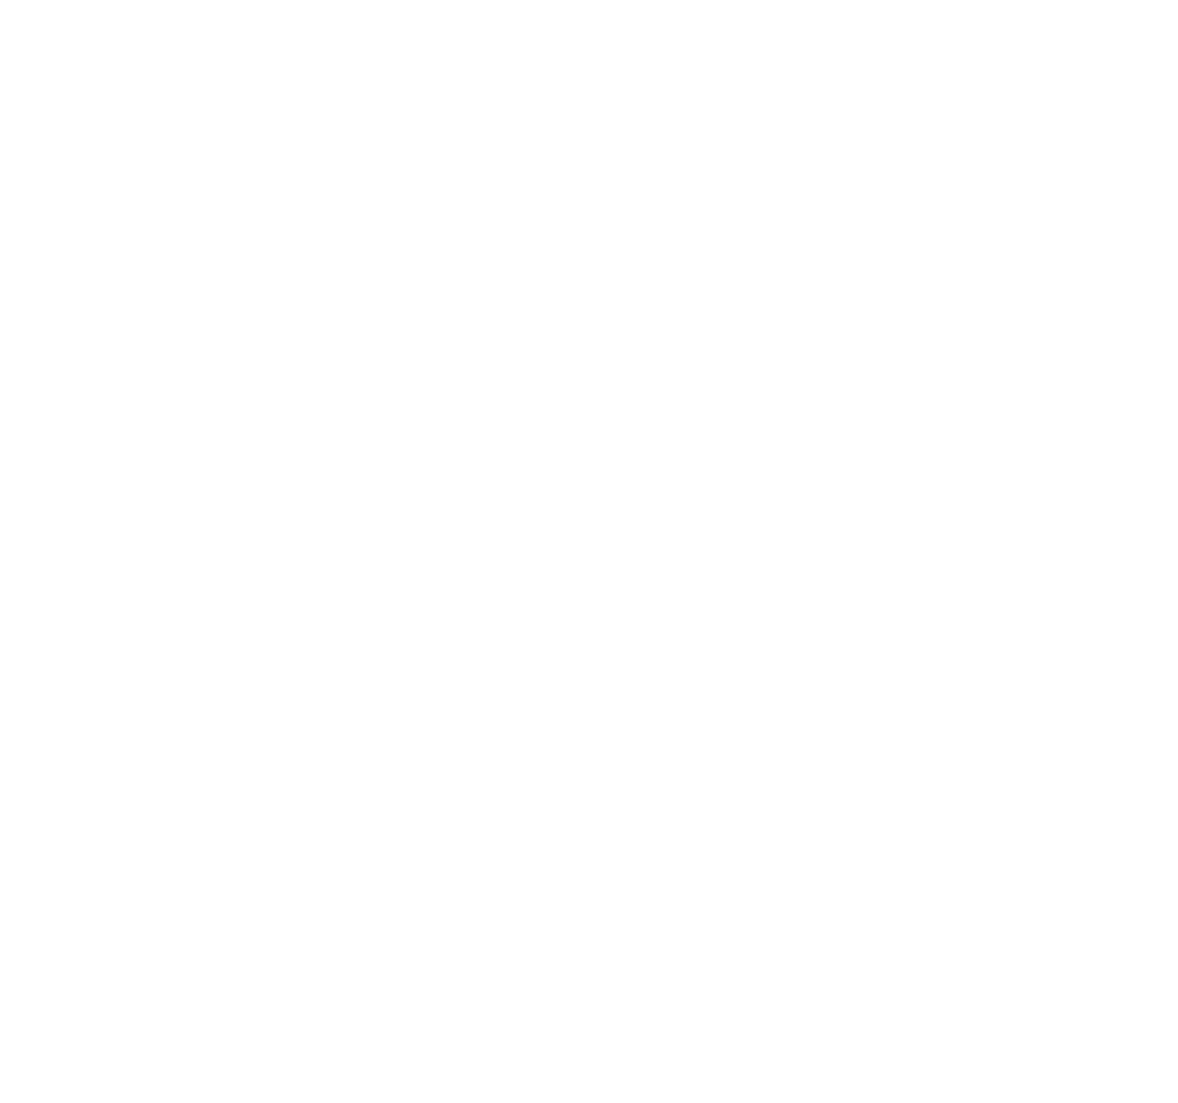 Challenge Breakthrough Hospitality